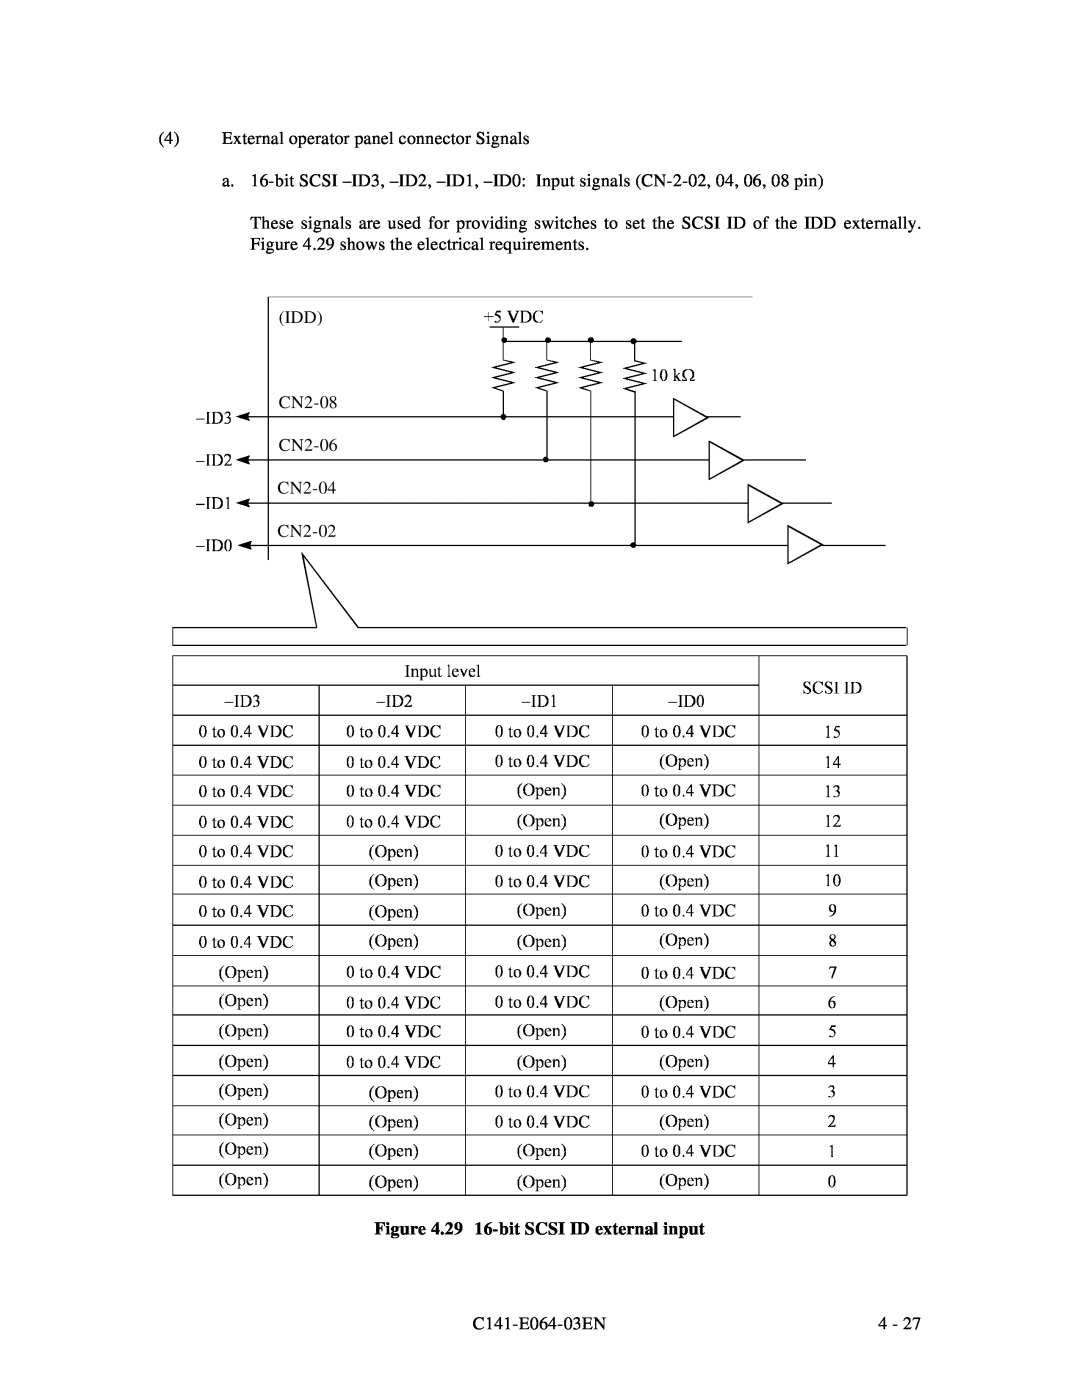 Fujitsu MAF3364LP, MAF3364LC 29 16-bit SCSI ID external input, External operator panel connector Signals, C141-E064-03EN 